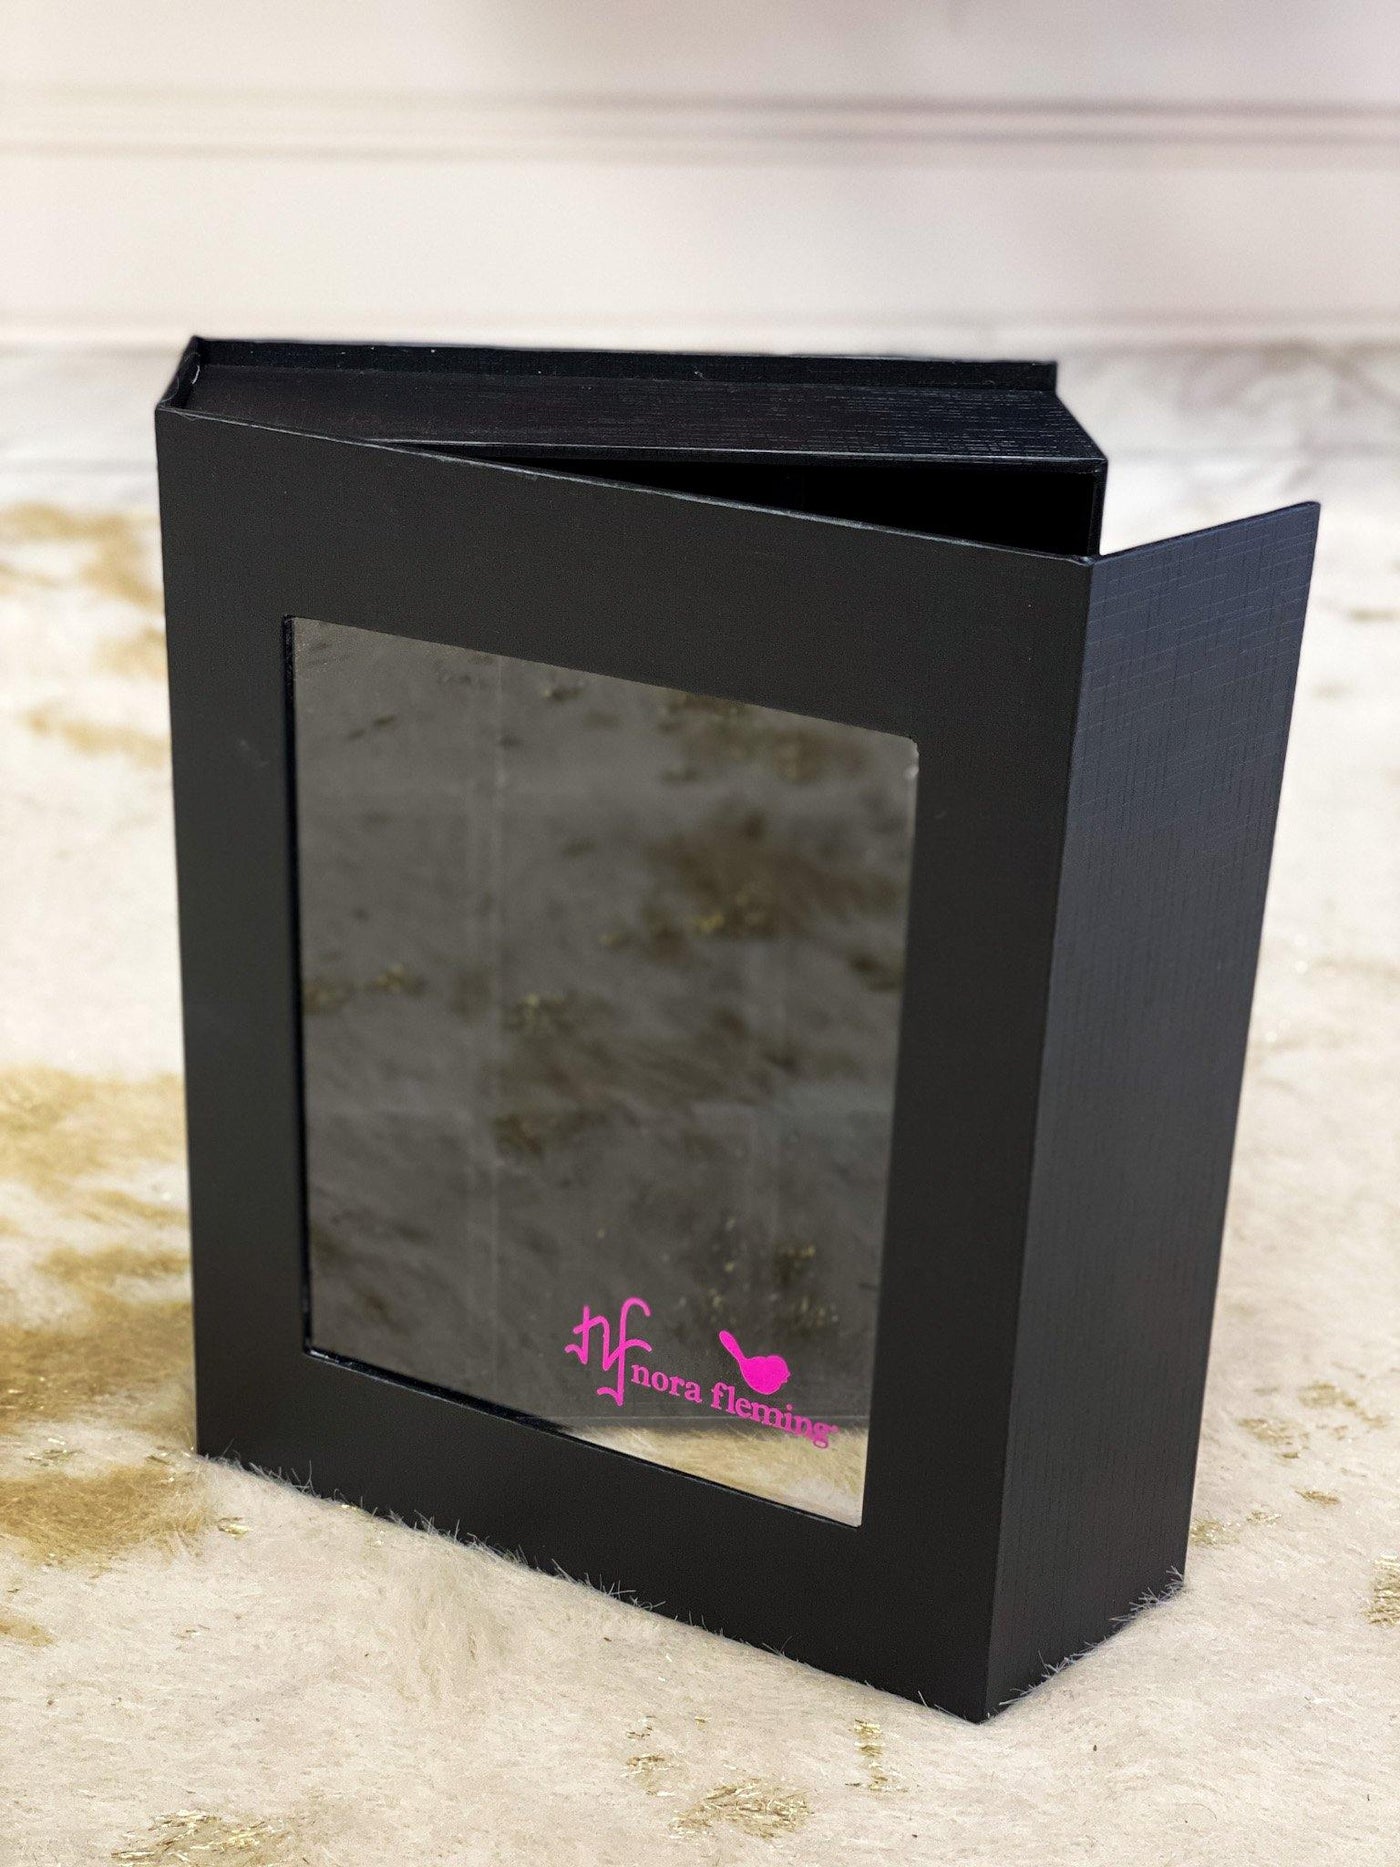 Black cardboard keepsake box for storing minis